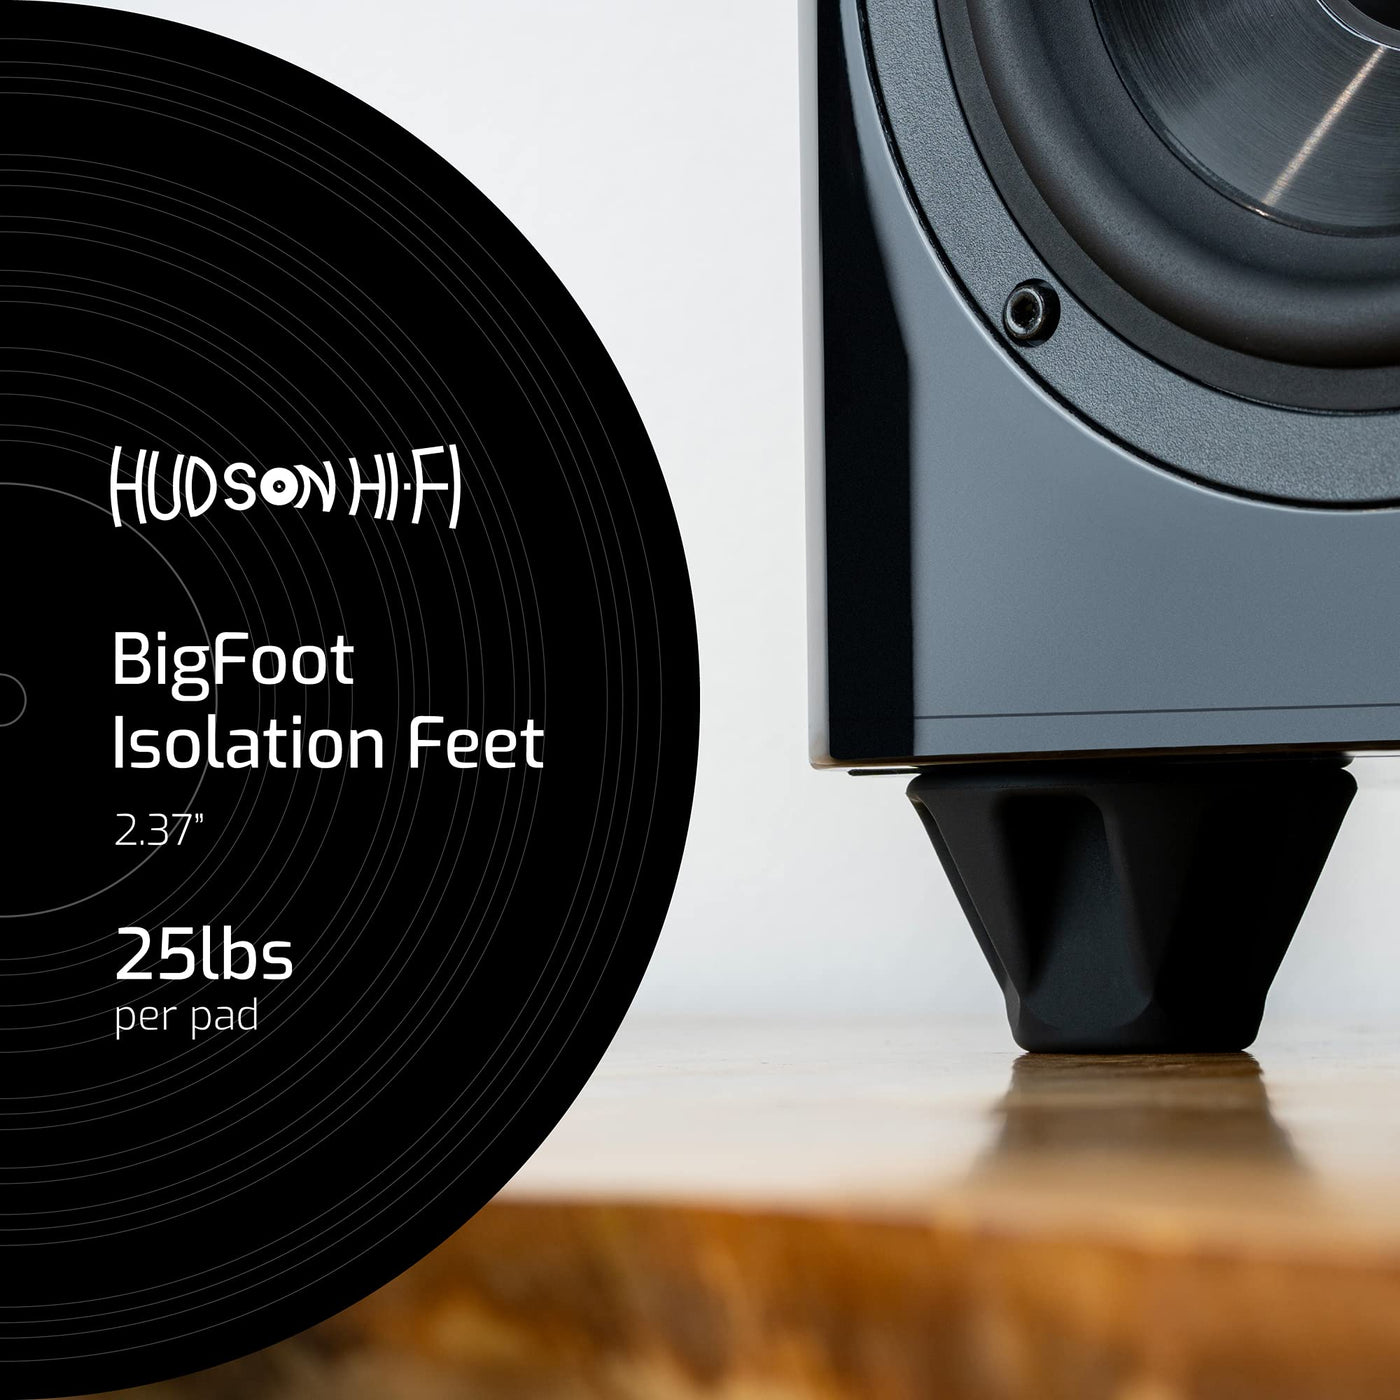 Hudson Hi-Fi Big Foot 1.5” Isolation Feet - Non-Adhesive Rubber Bumpers